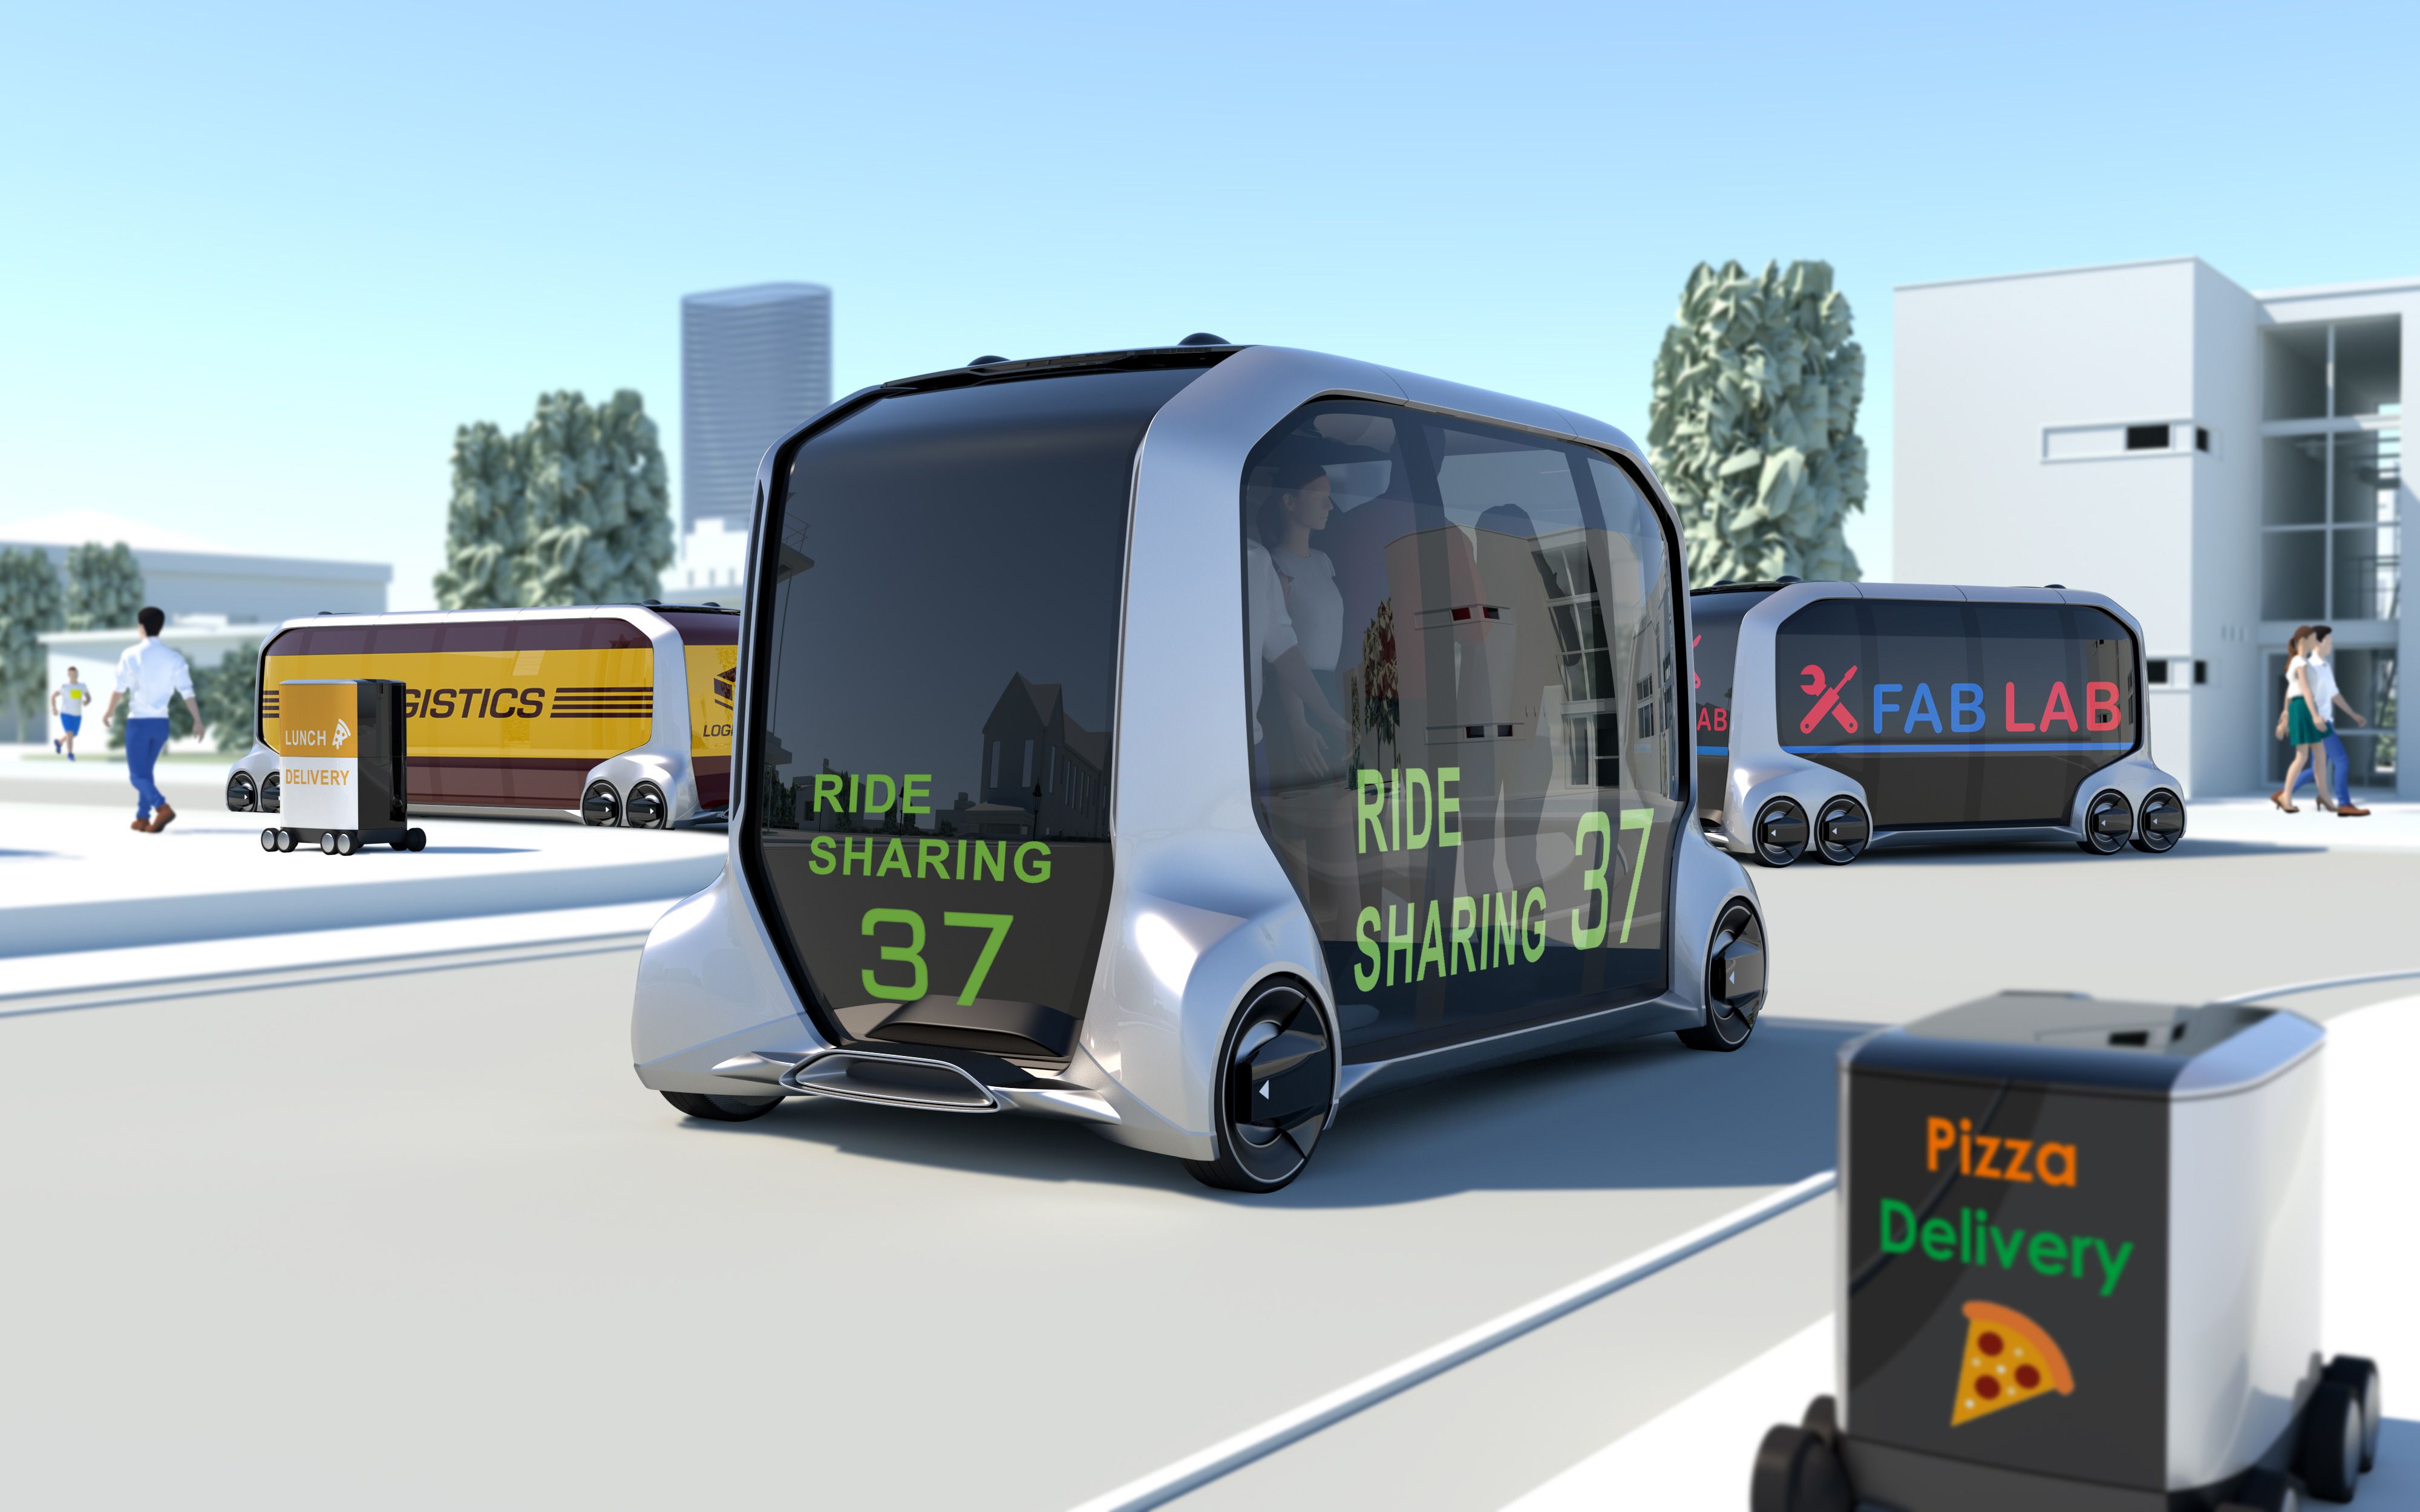 a toyora rides hare concept car bus public driverless